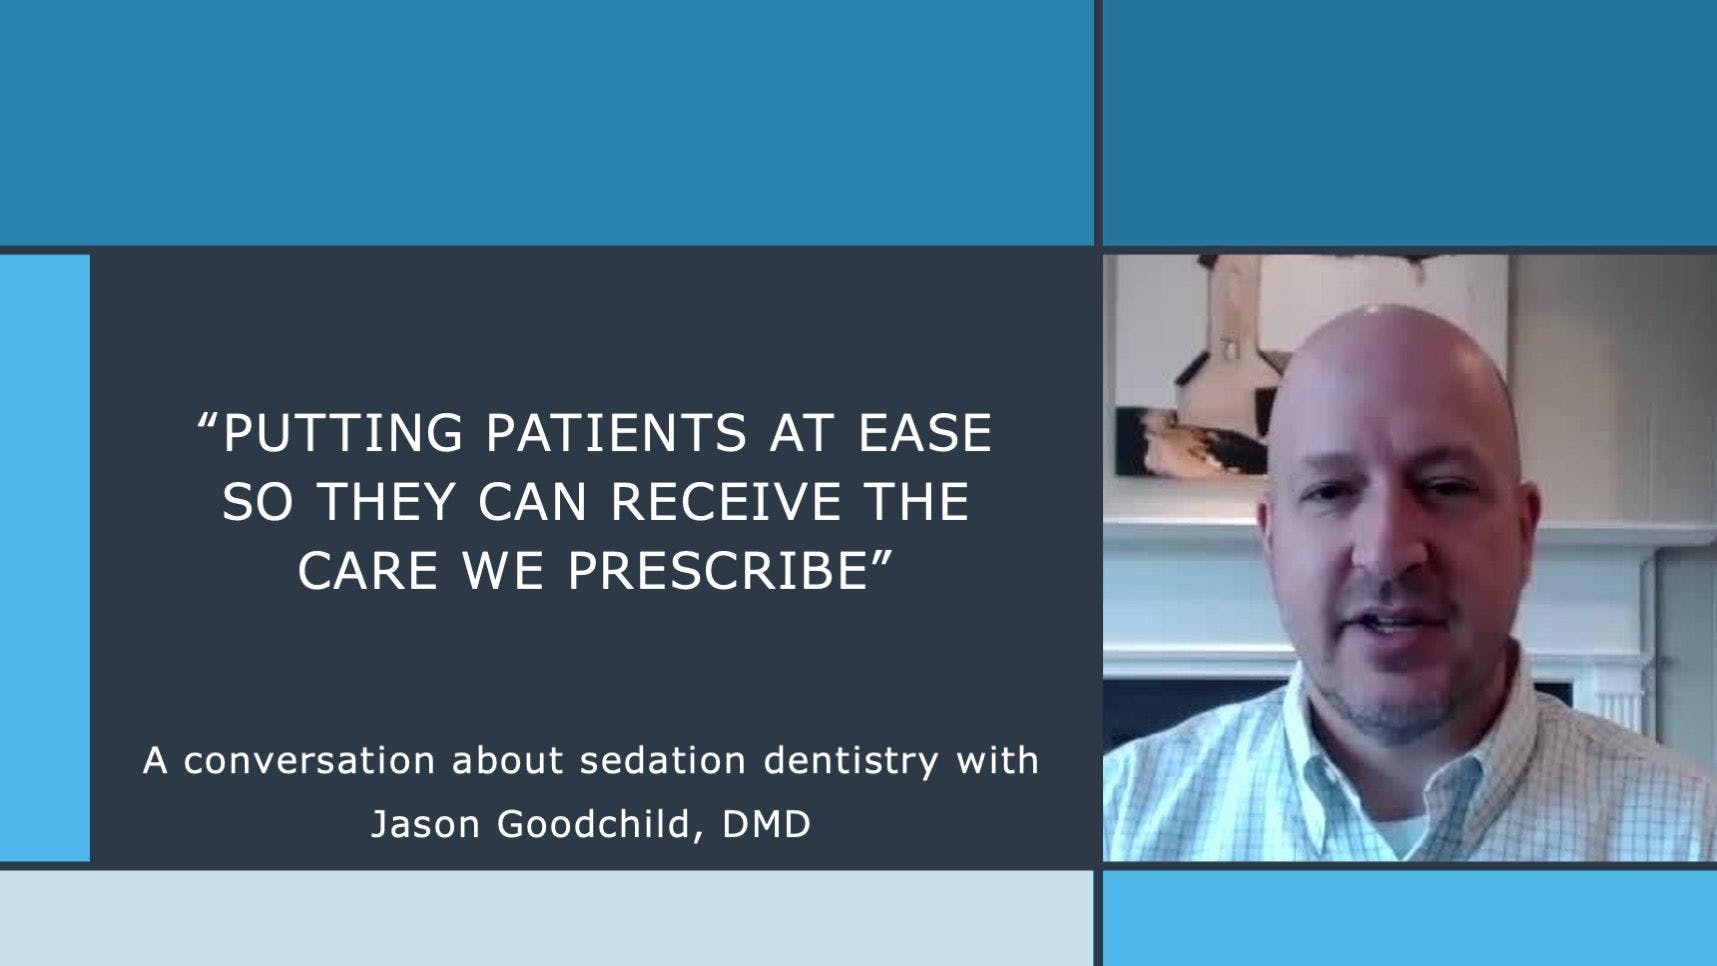 A conversation about sedation dentistry with Jason Goodchild, DMD